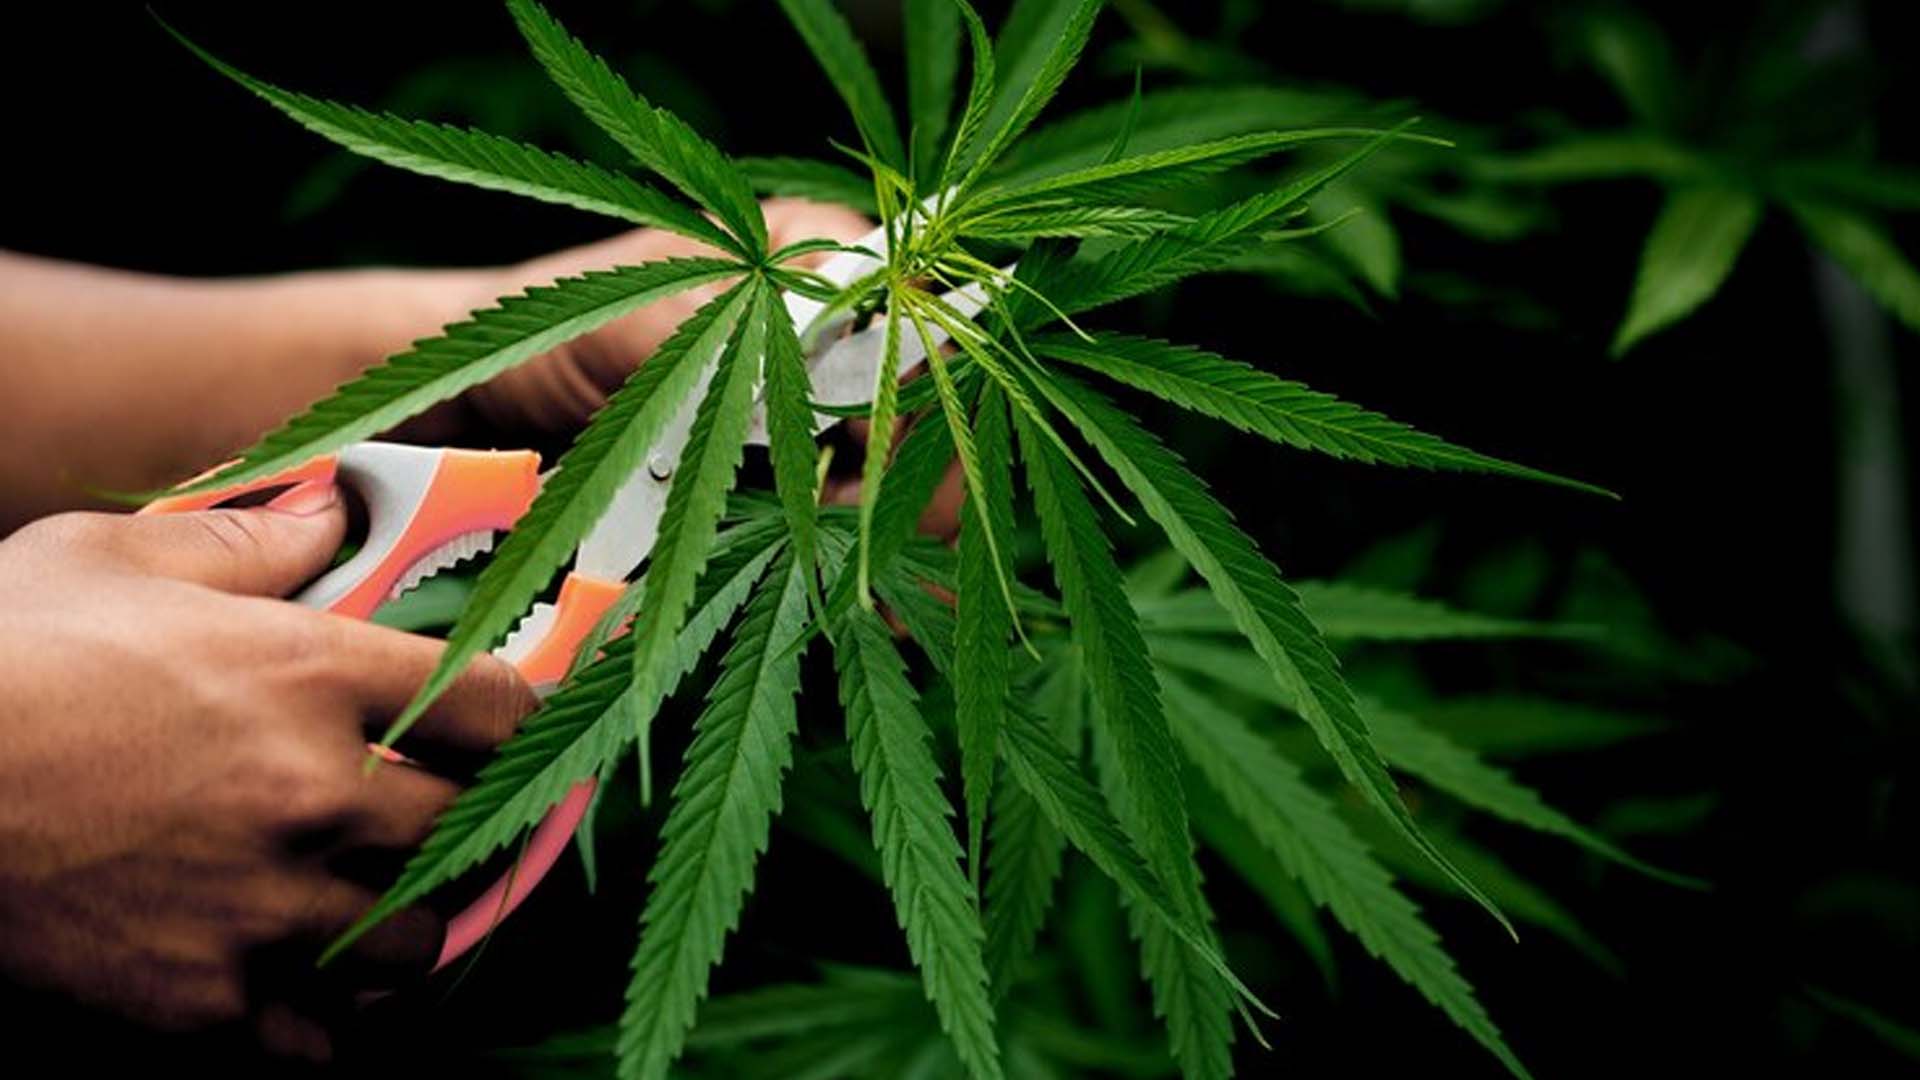 Marijuana or cannabis